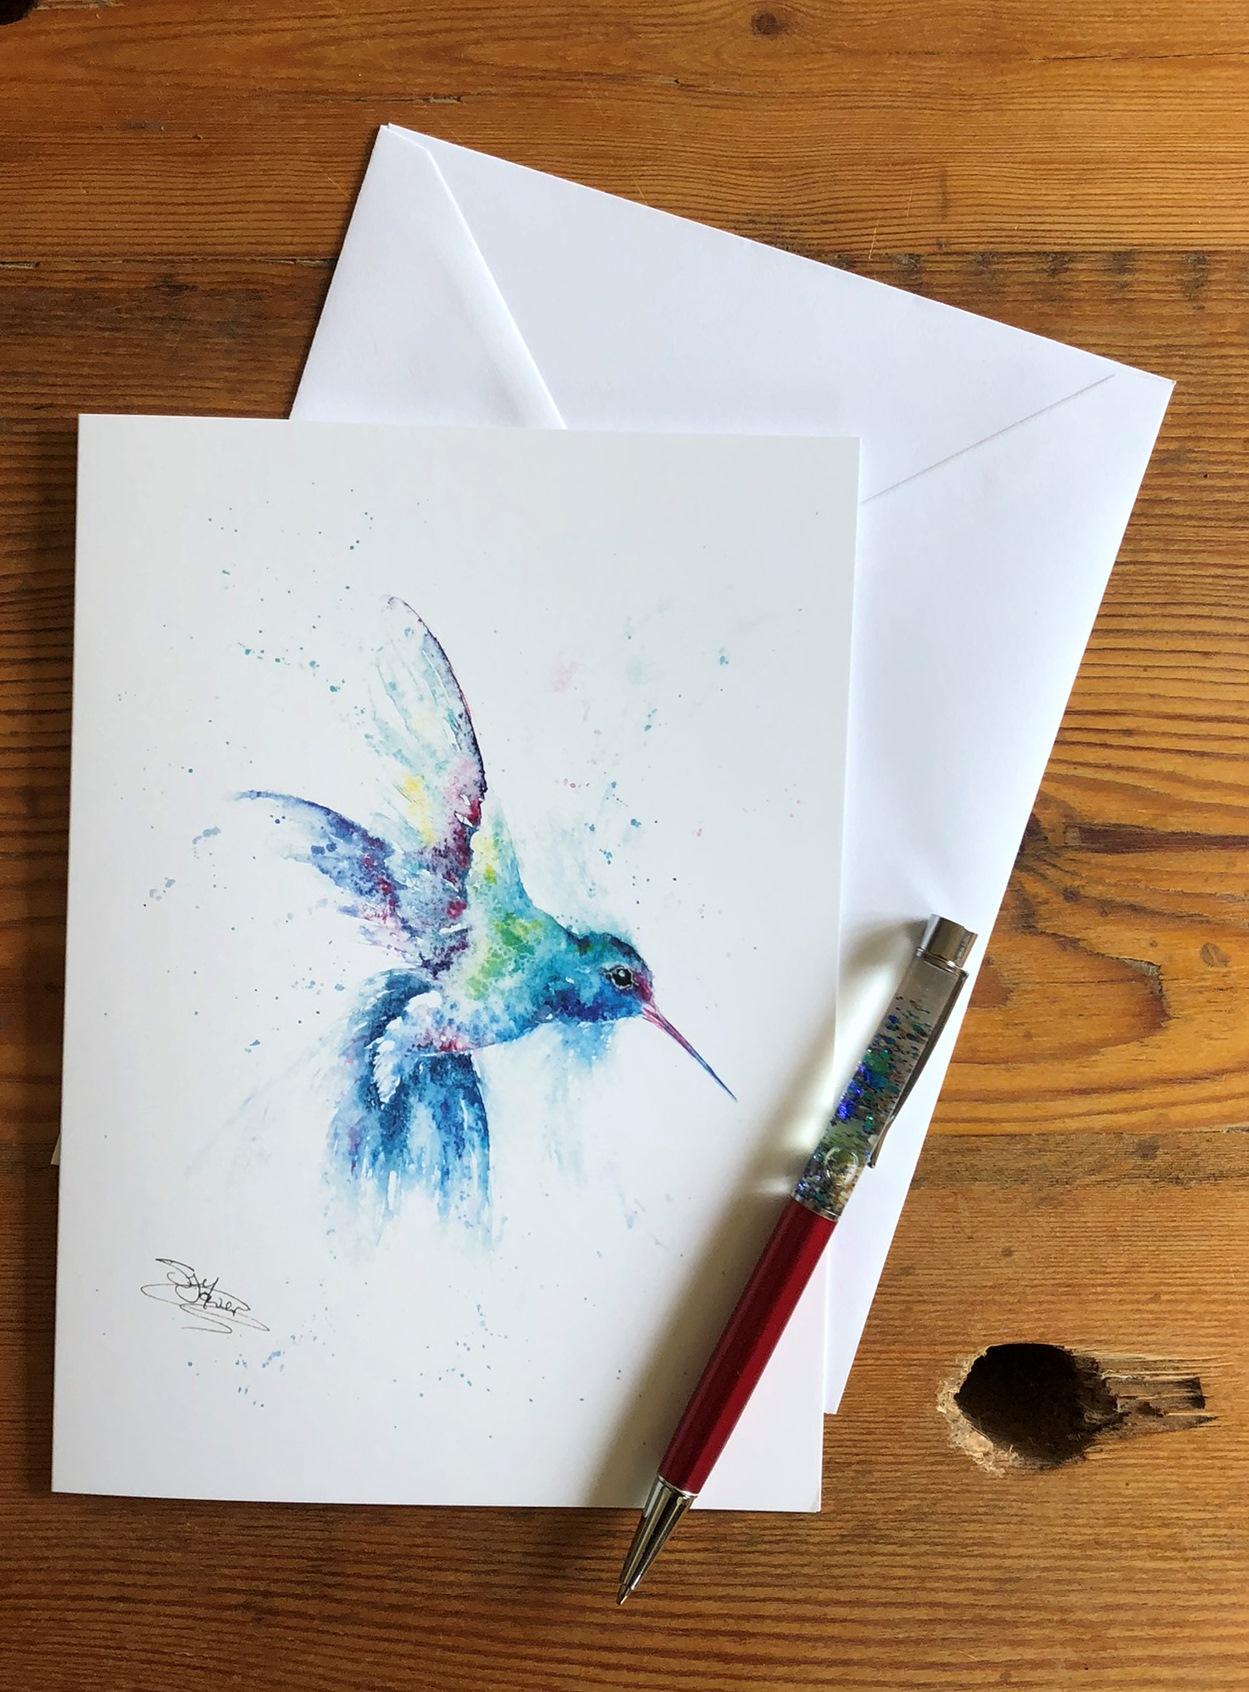 hummingbird card